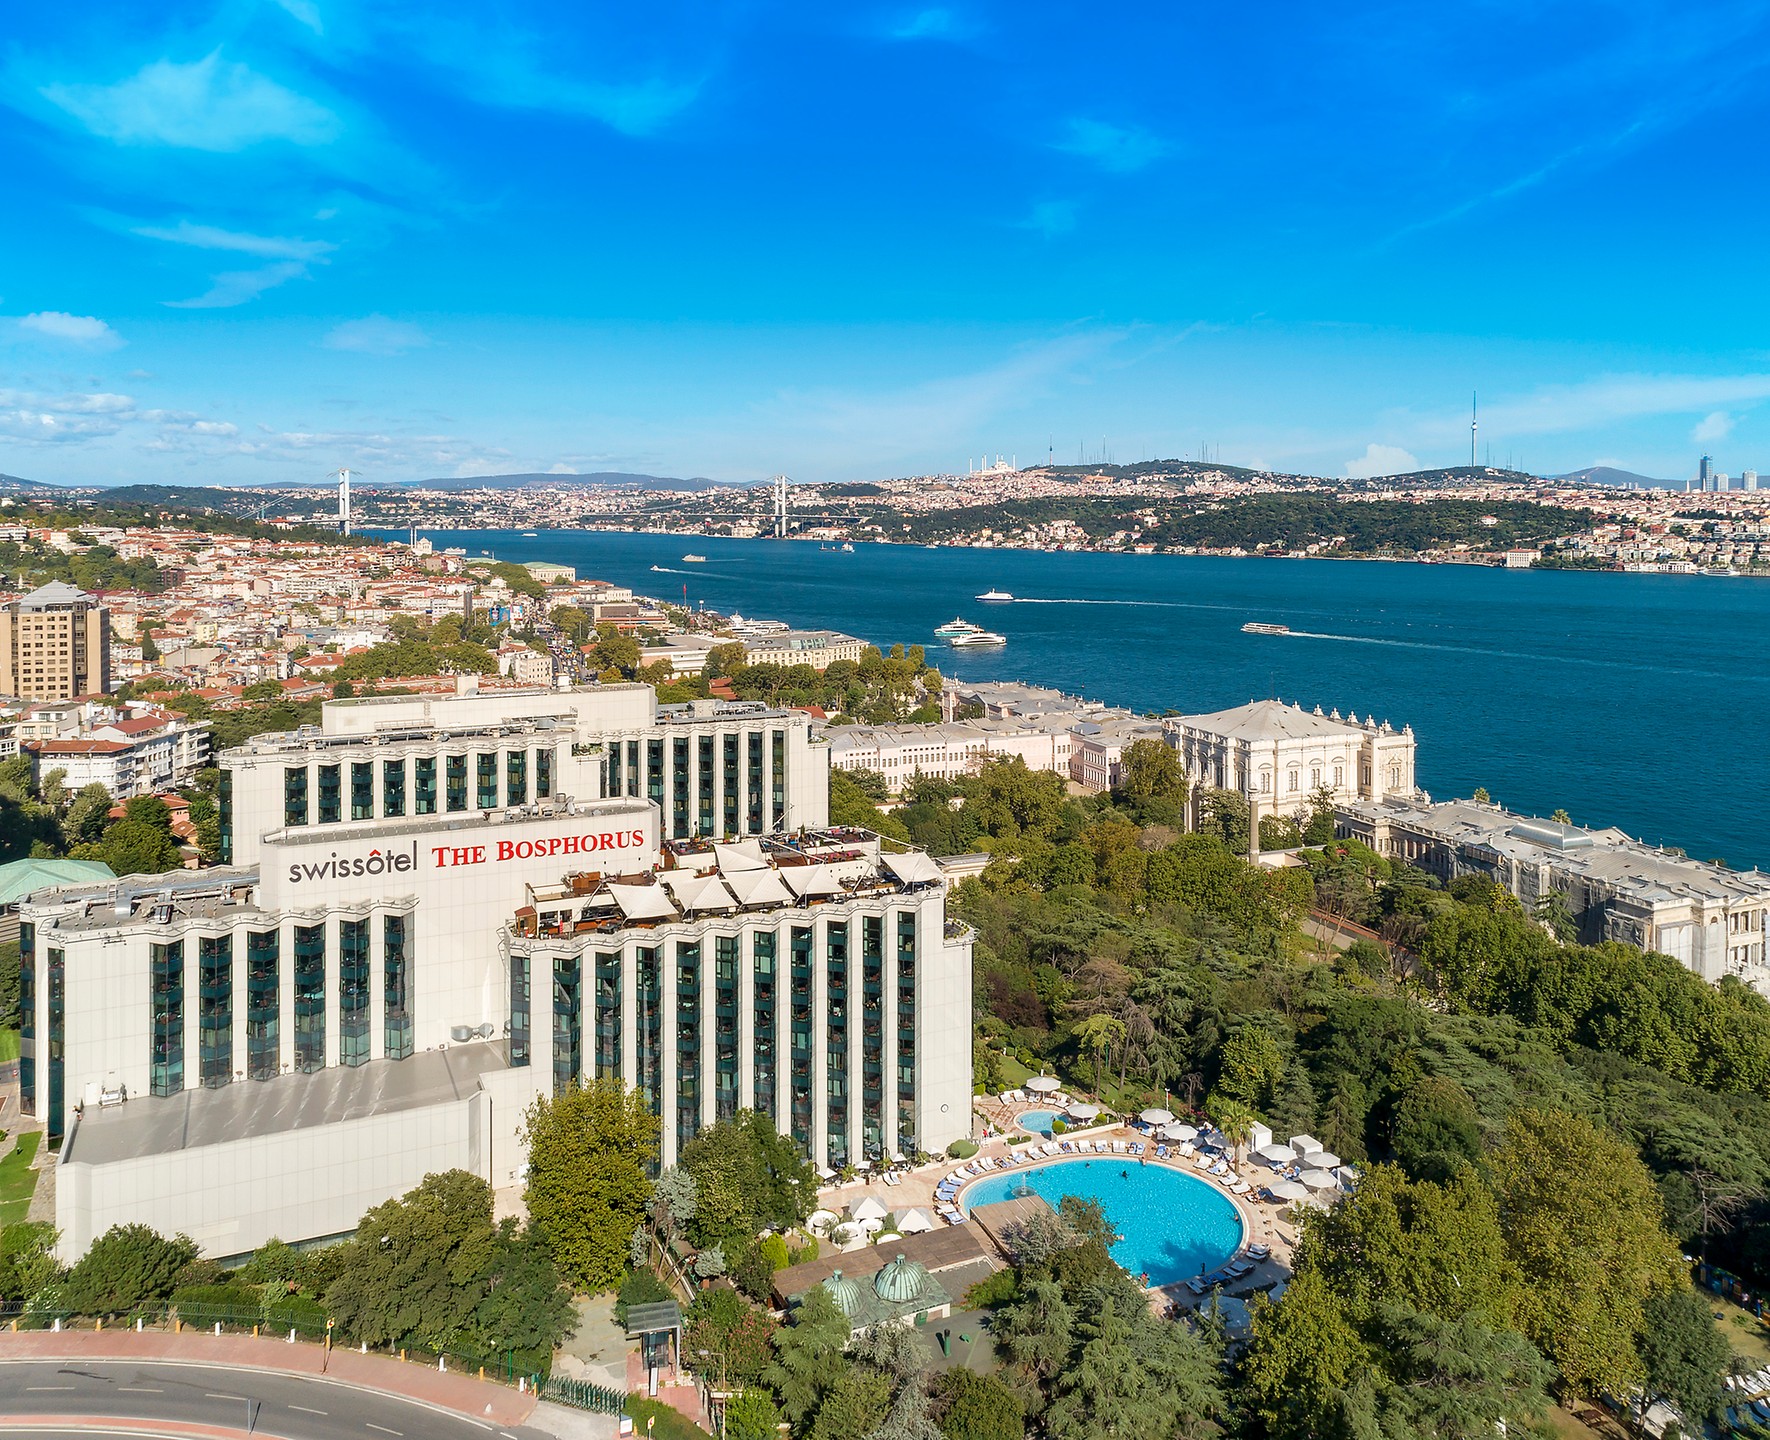 Swissotel The Bosphorus Hotel